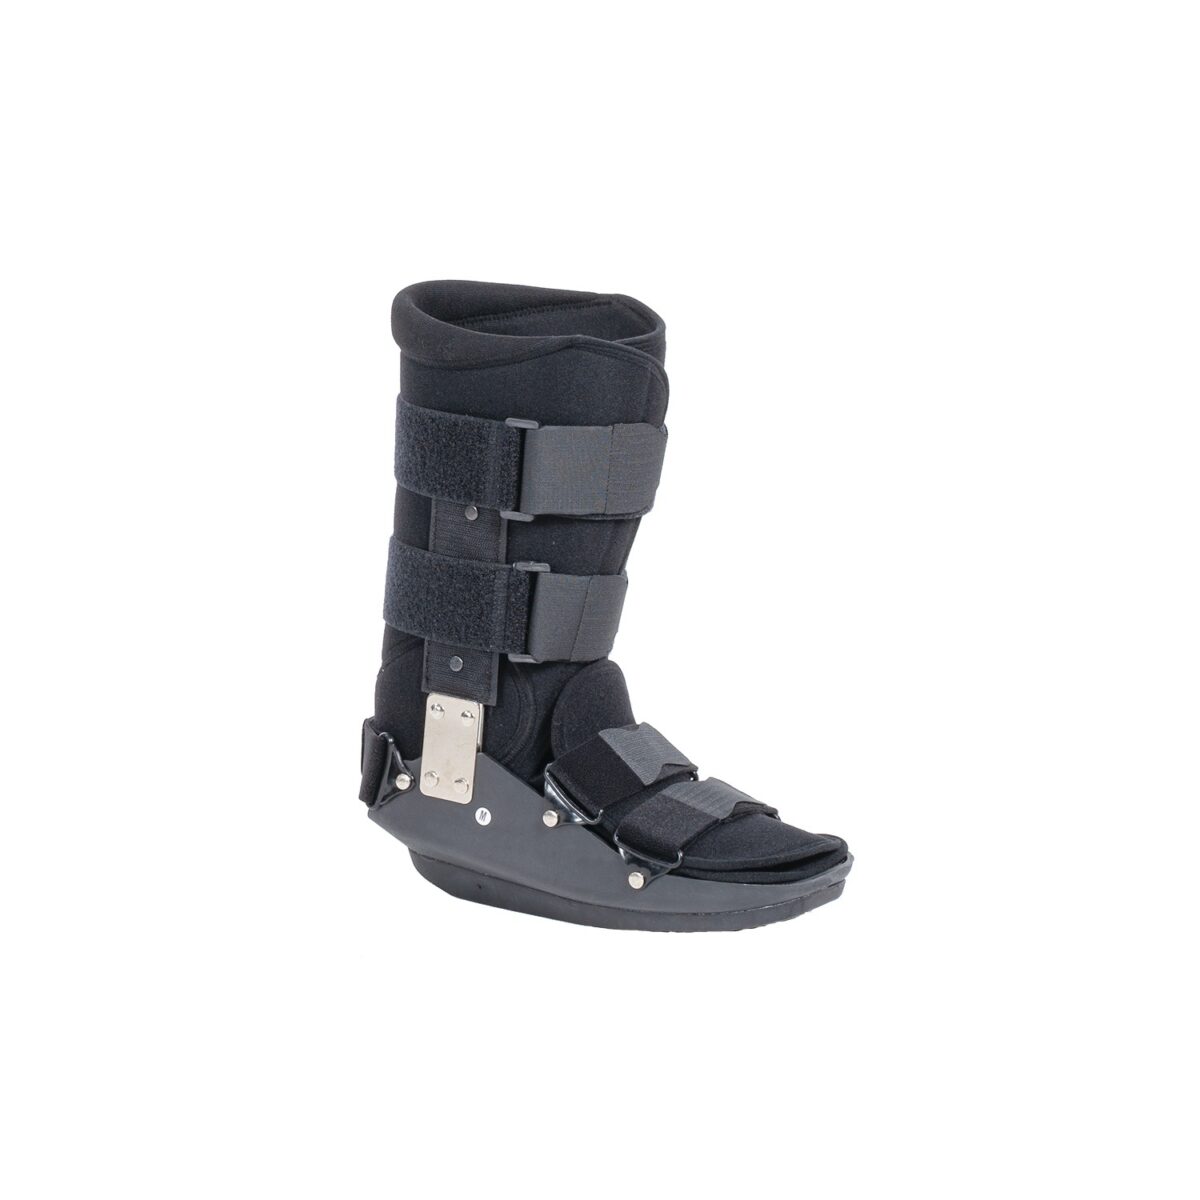 wingmed orthopedic equipments W620 achilles tendon boot short 39